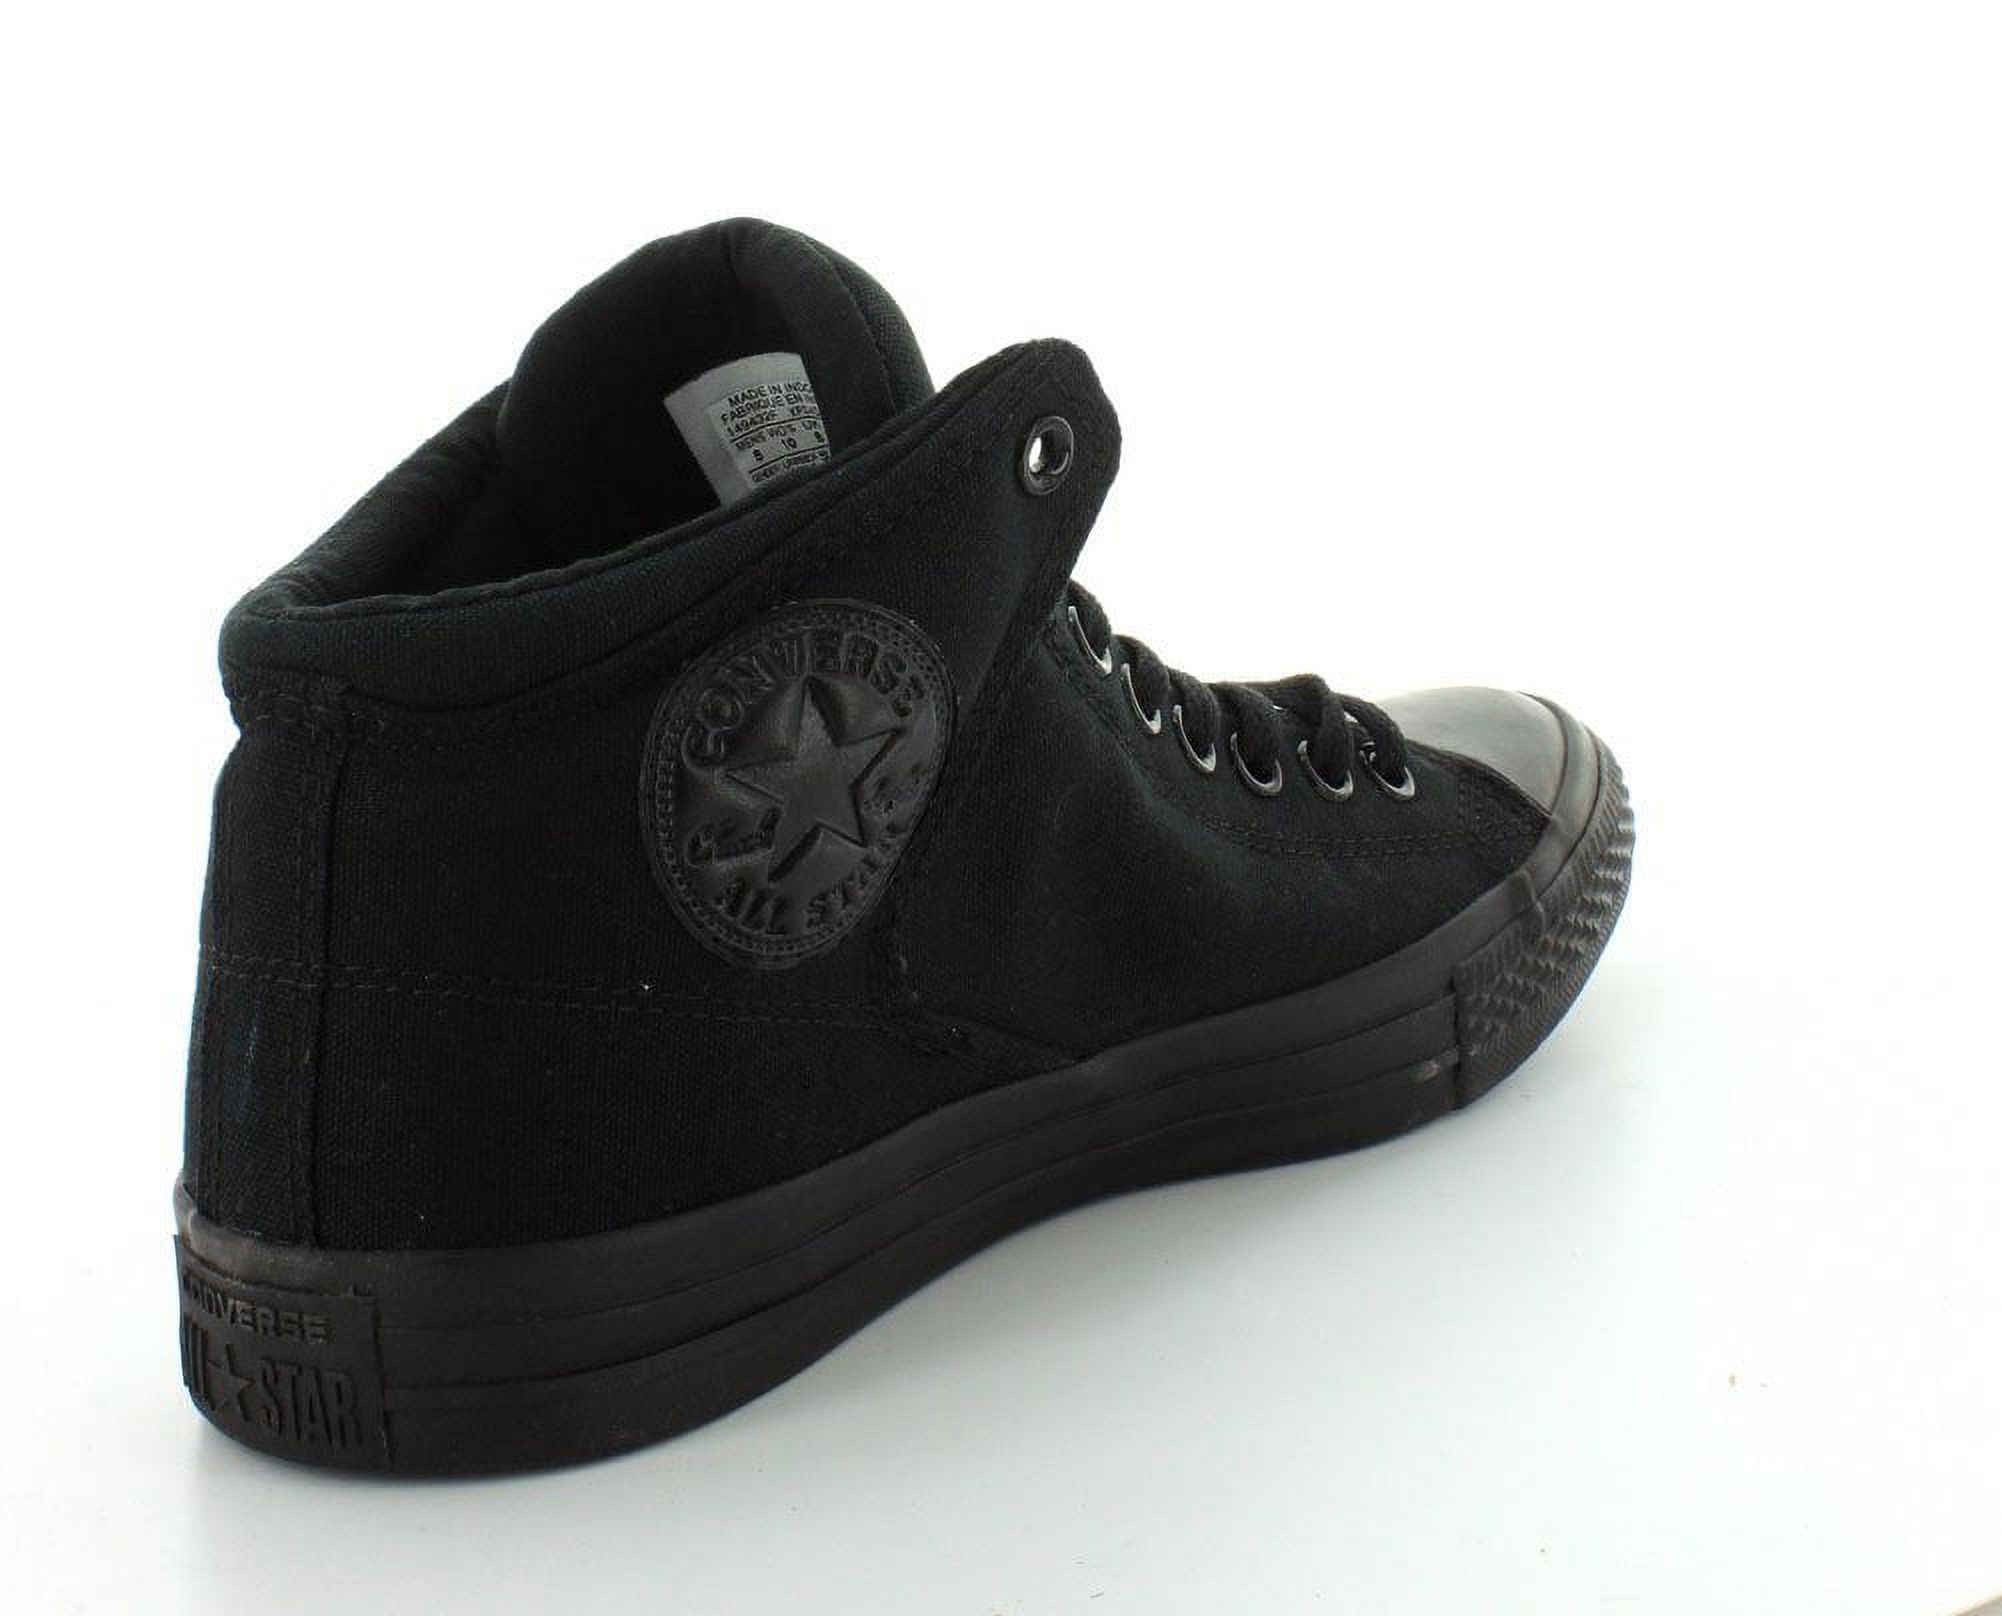 Converse Men's Street Canvas High Top Sneaker, Black/Black/Black, 12 M US - image 5 of 5